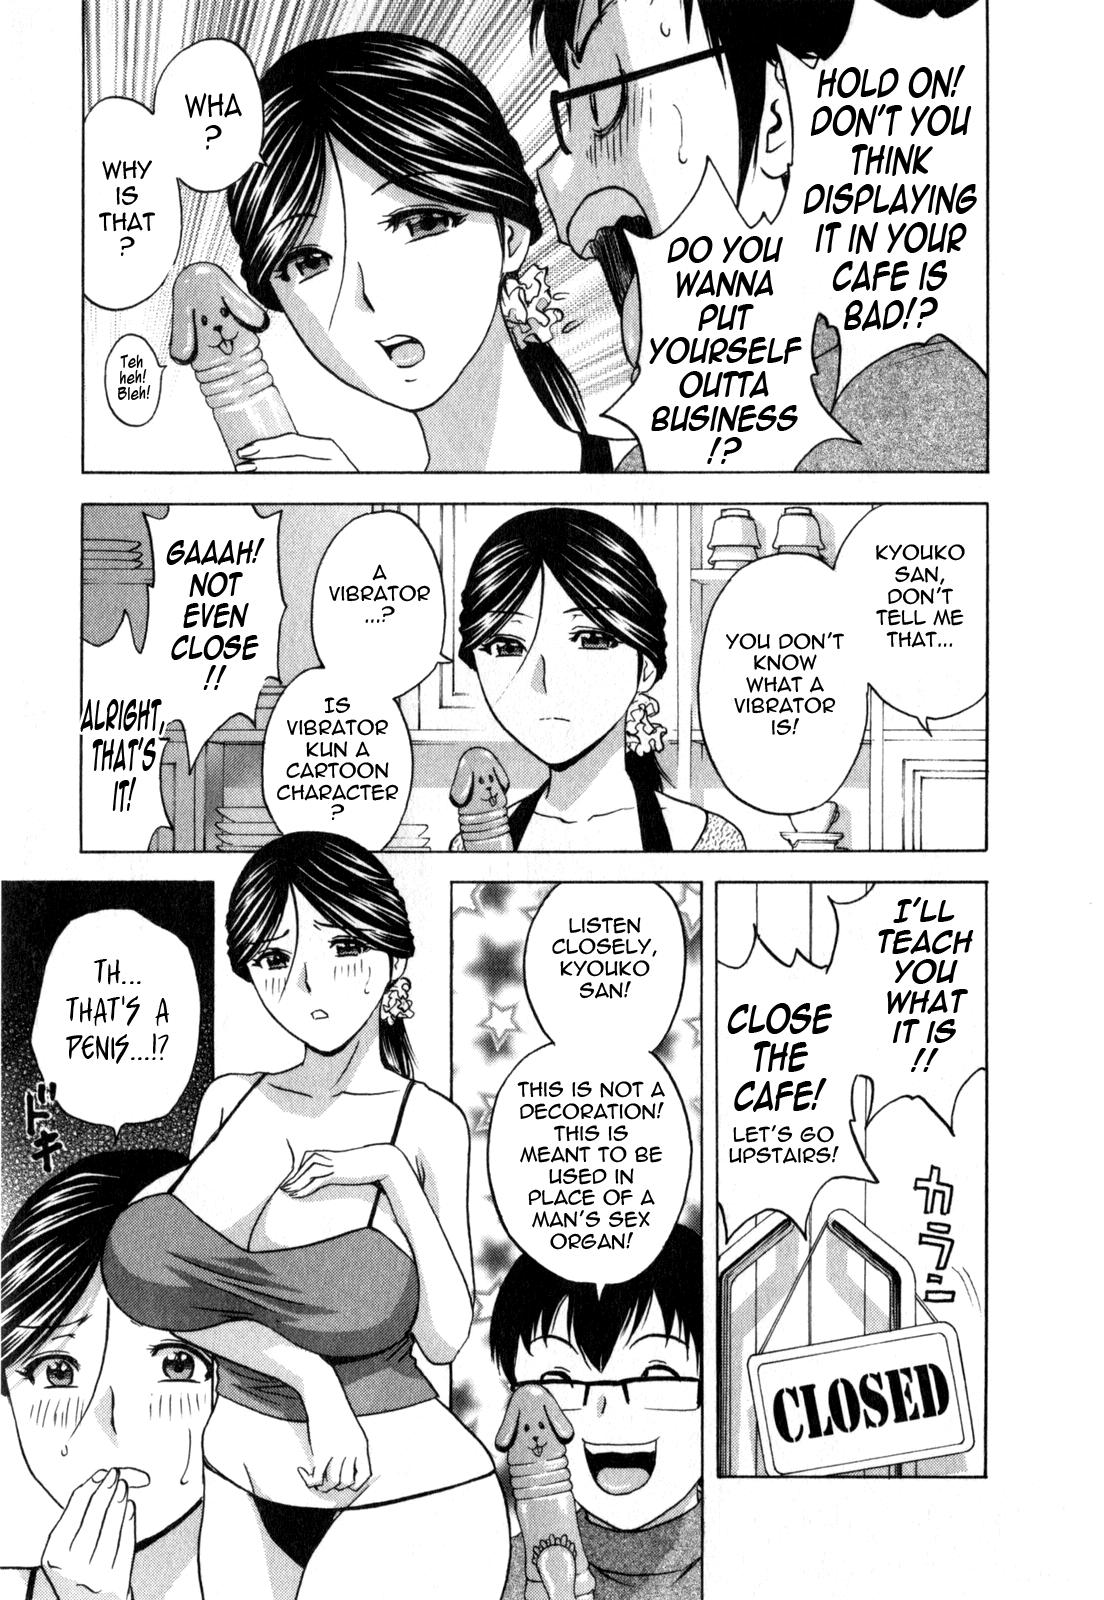 [Hidemaru] Life with Married Women Just Like a Manga 3 - Ch. 1-2 [English] {Tadanohito} 16